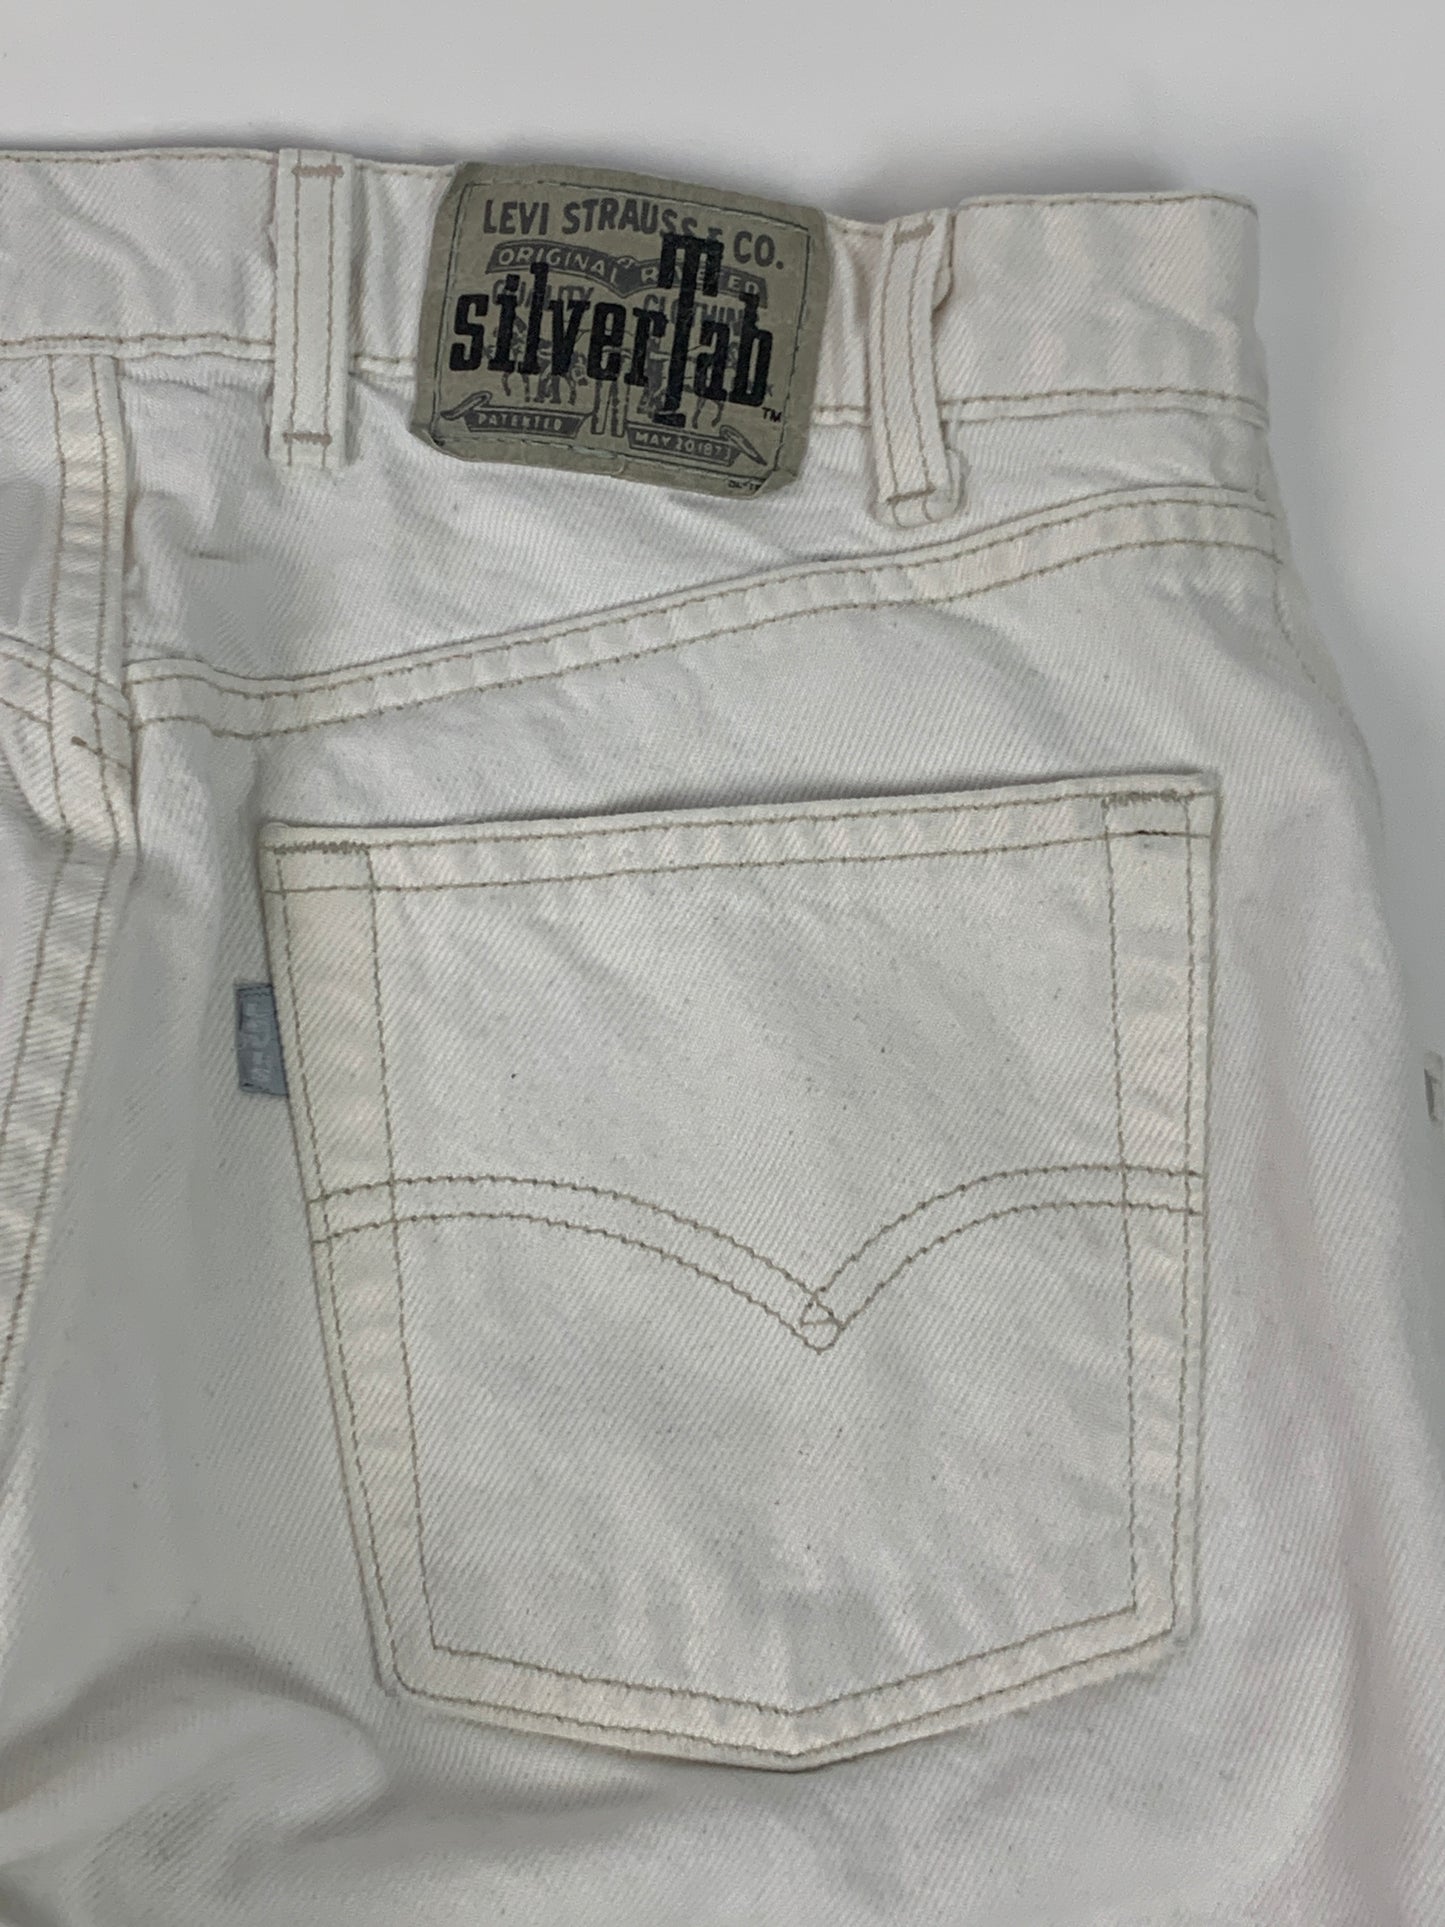 Levis SilverTab Vintage Jeans - 33 x 30